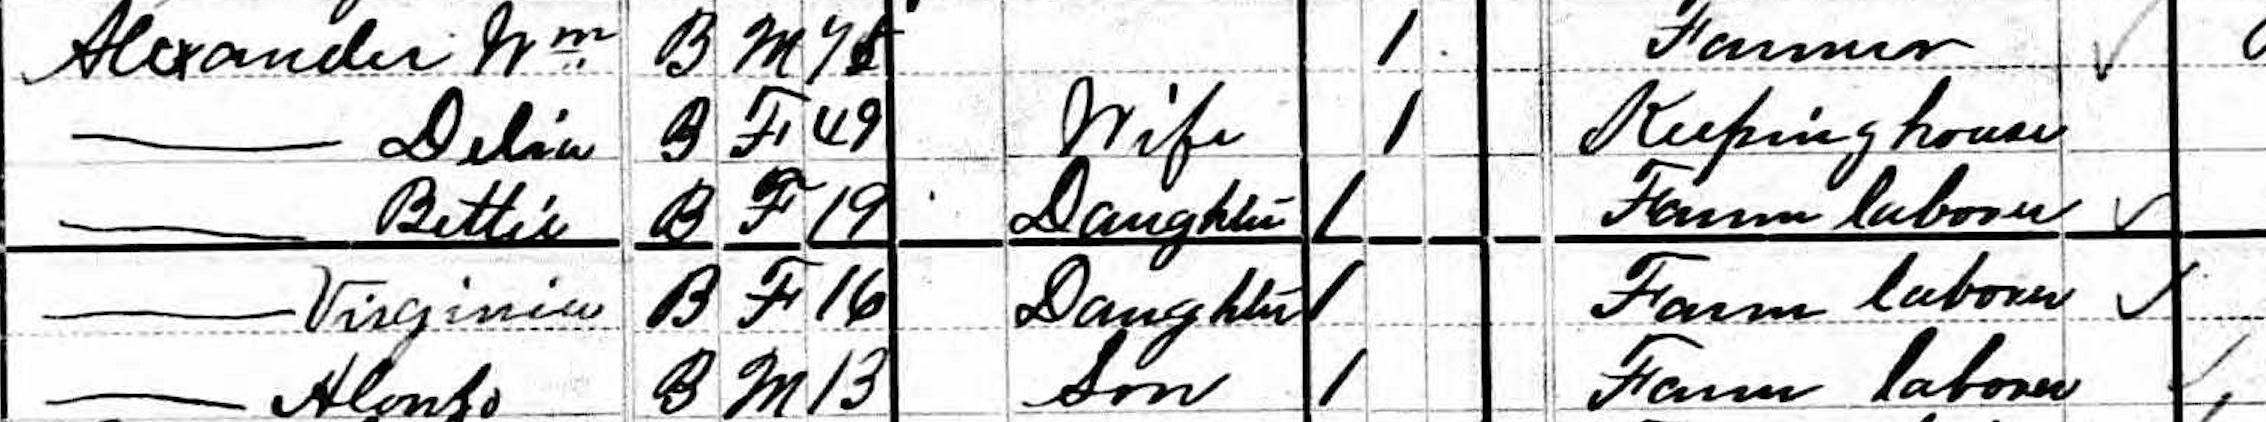 1880 Census, Noxubee County, MS